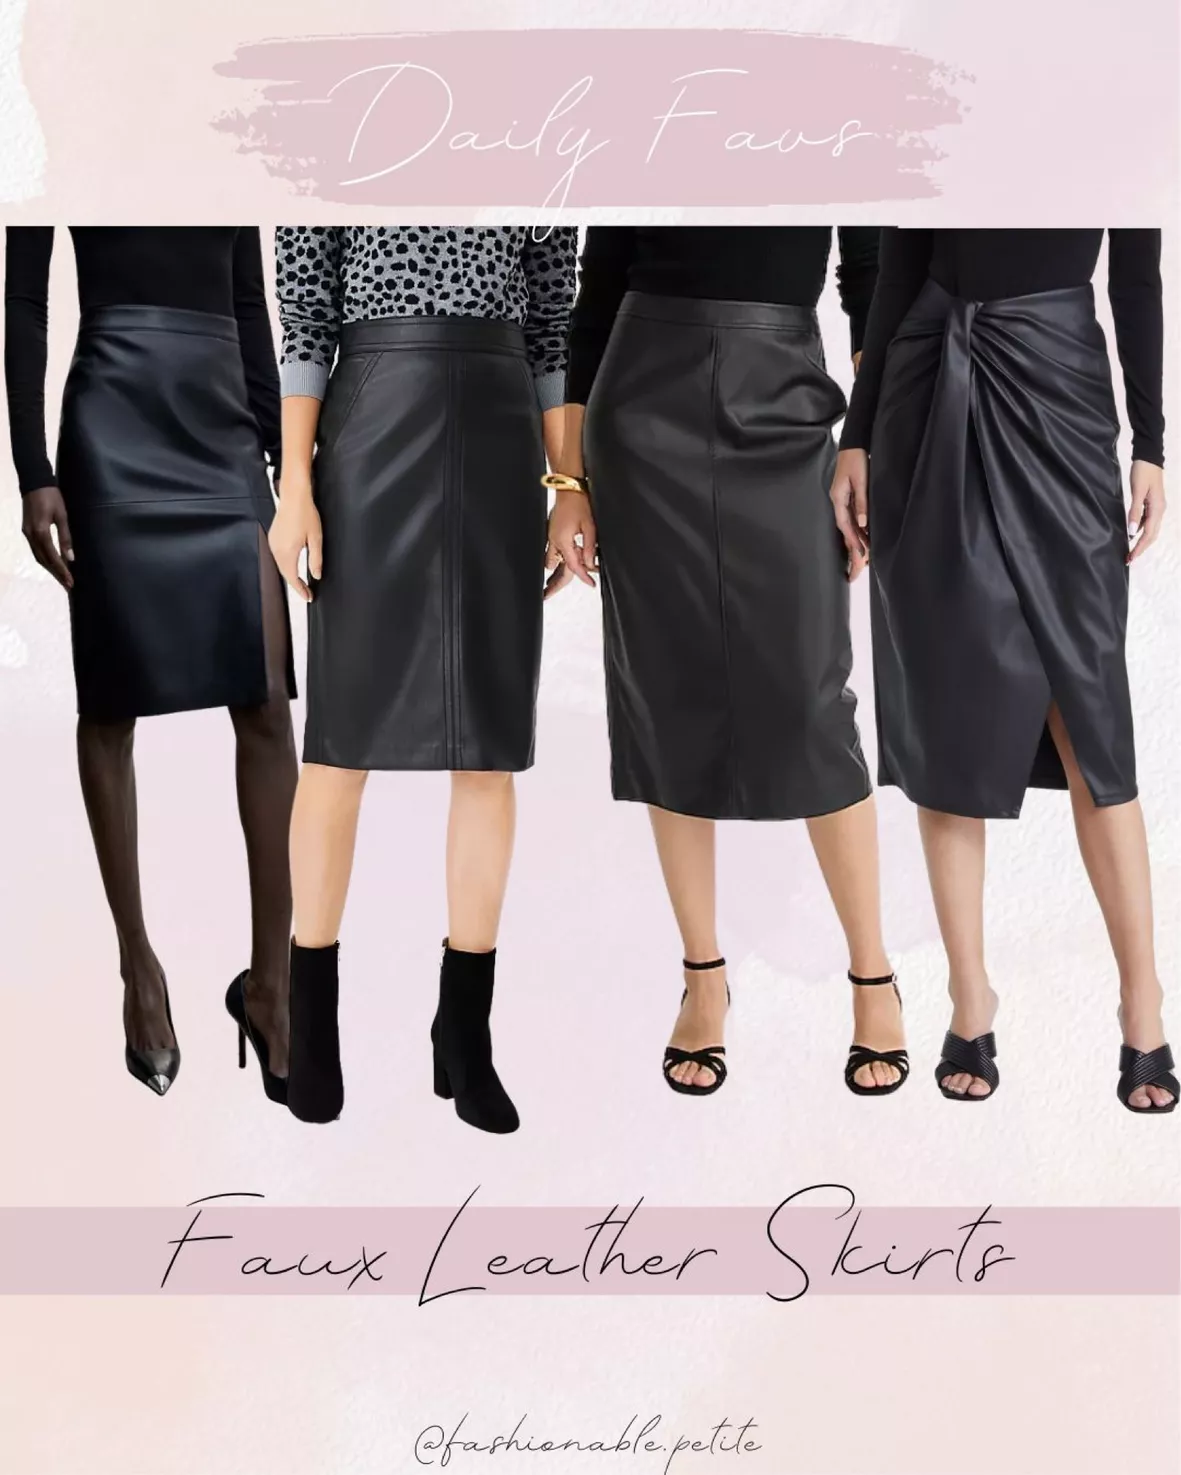 Faux-leather pencil skirt - Women